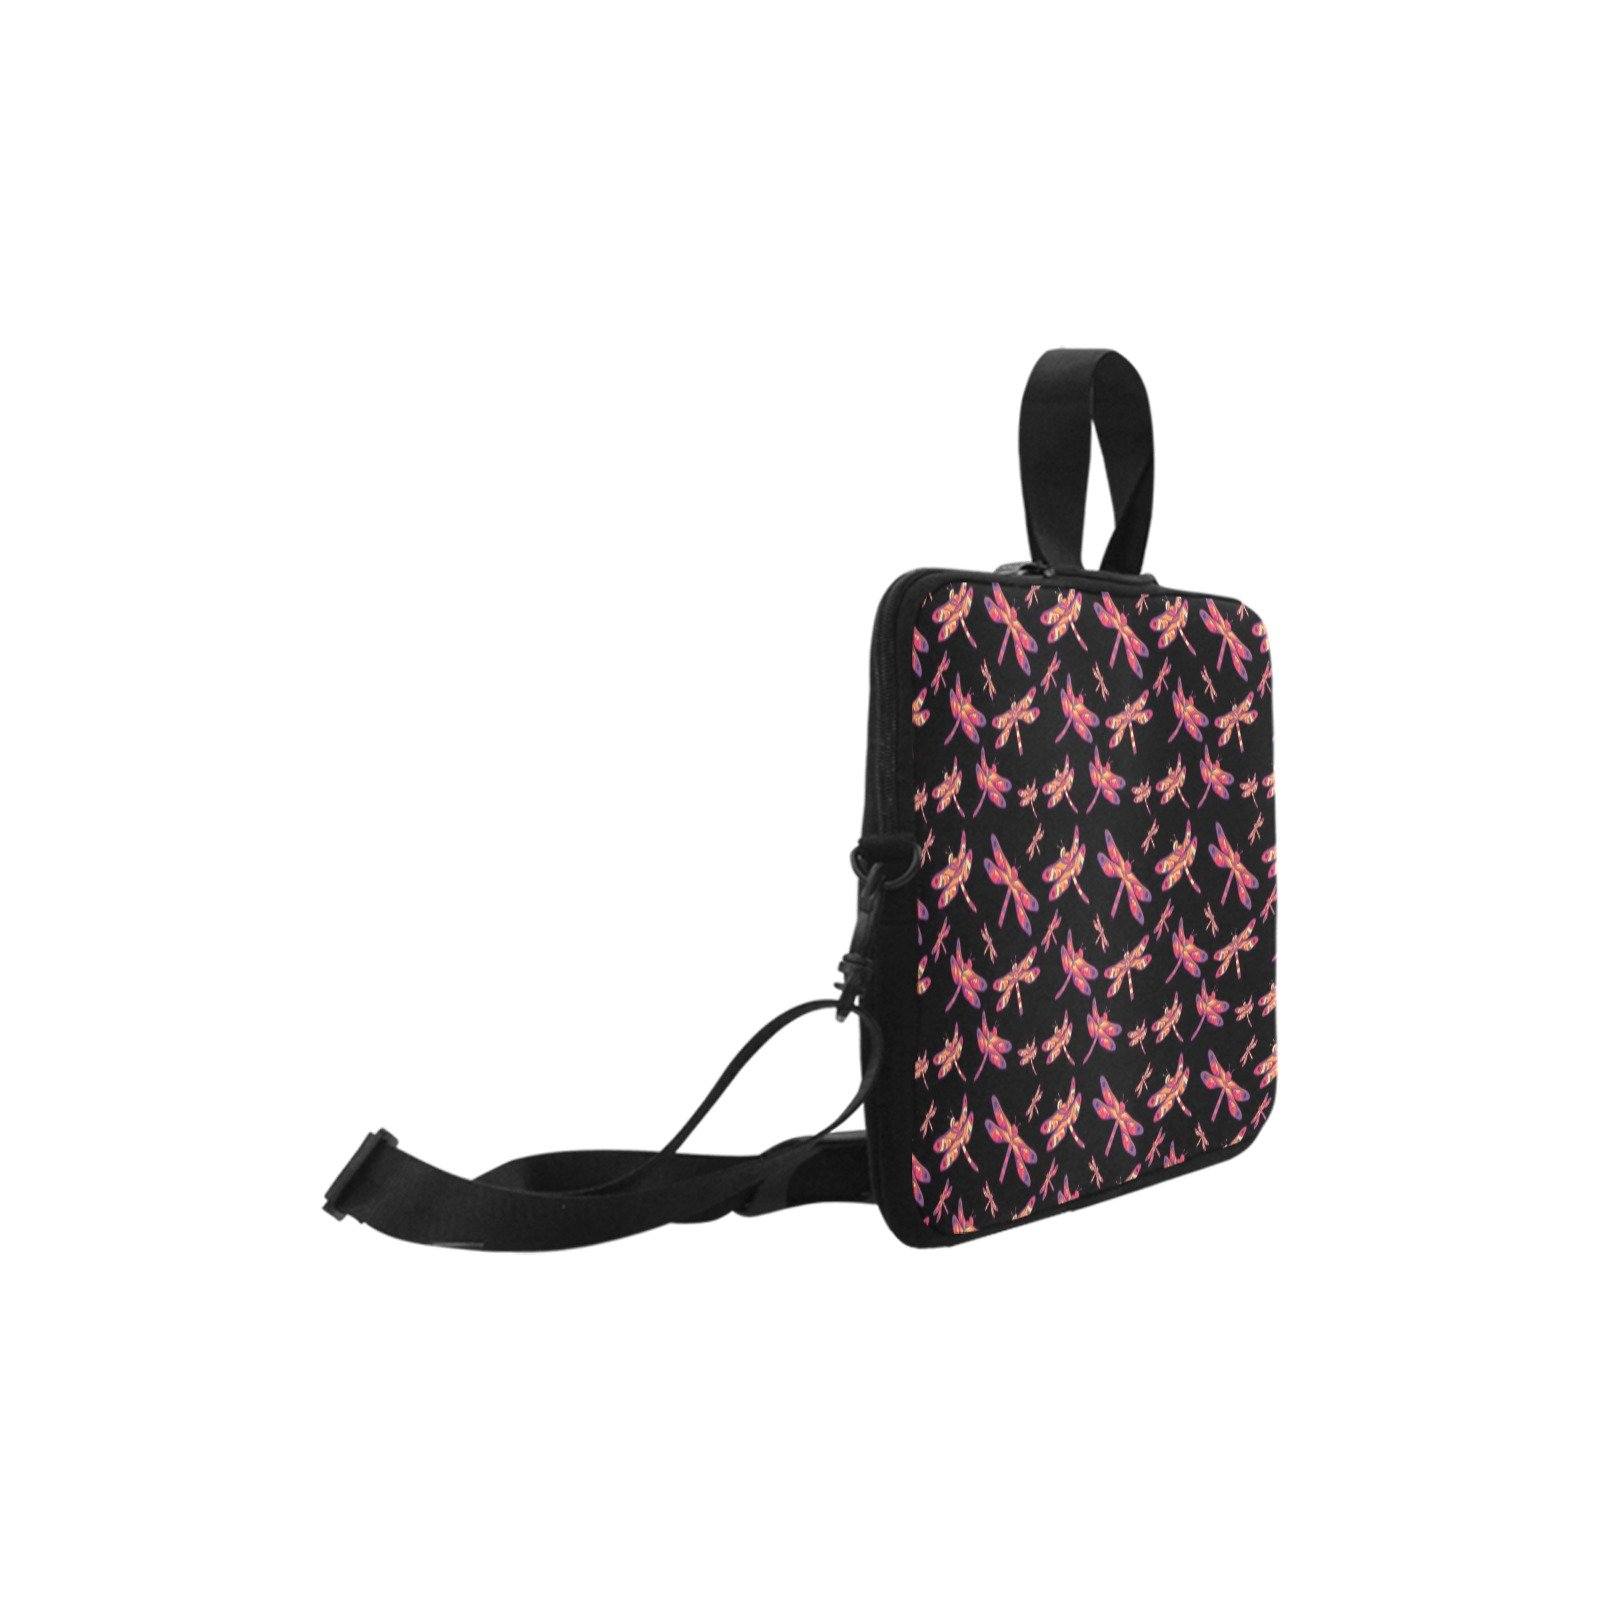 Gathering Noir Laptop Handbags 10" bag e-joyer 